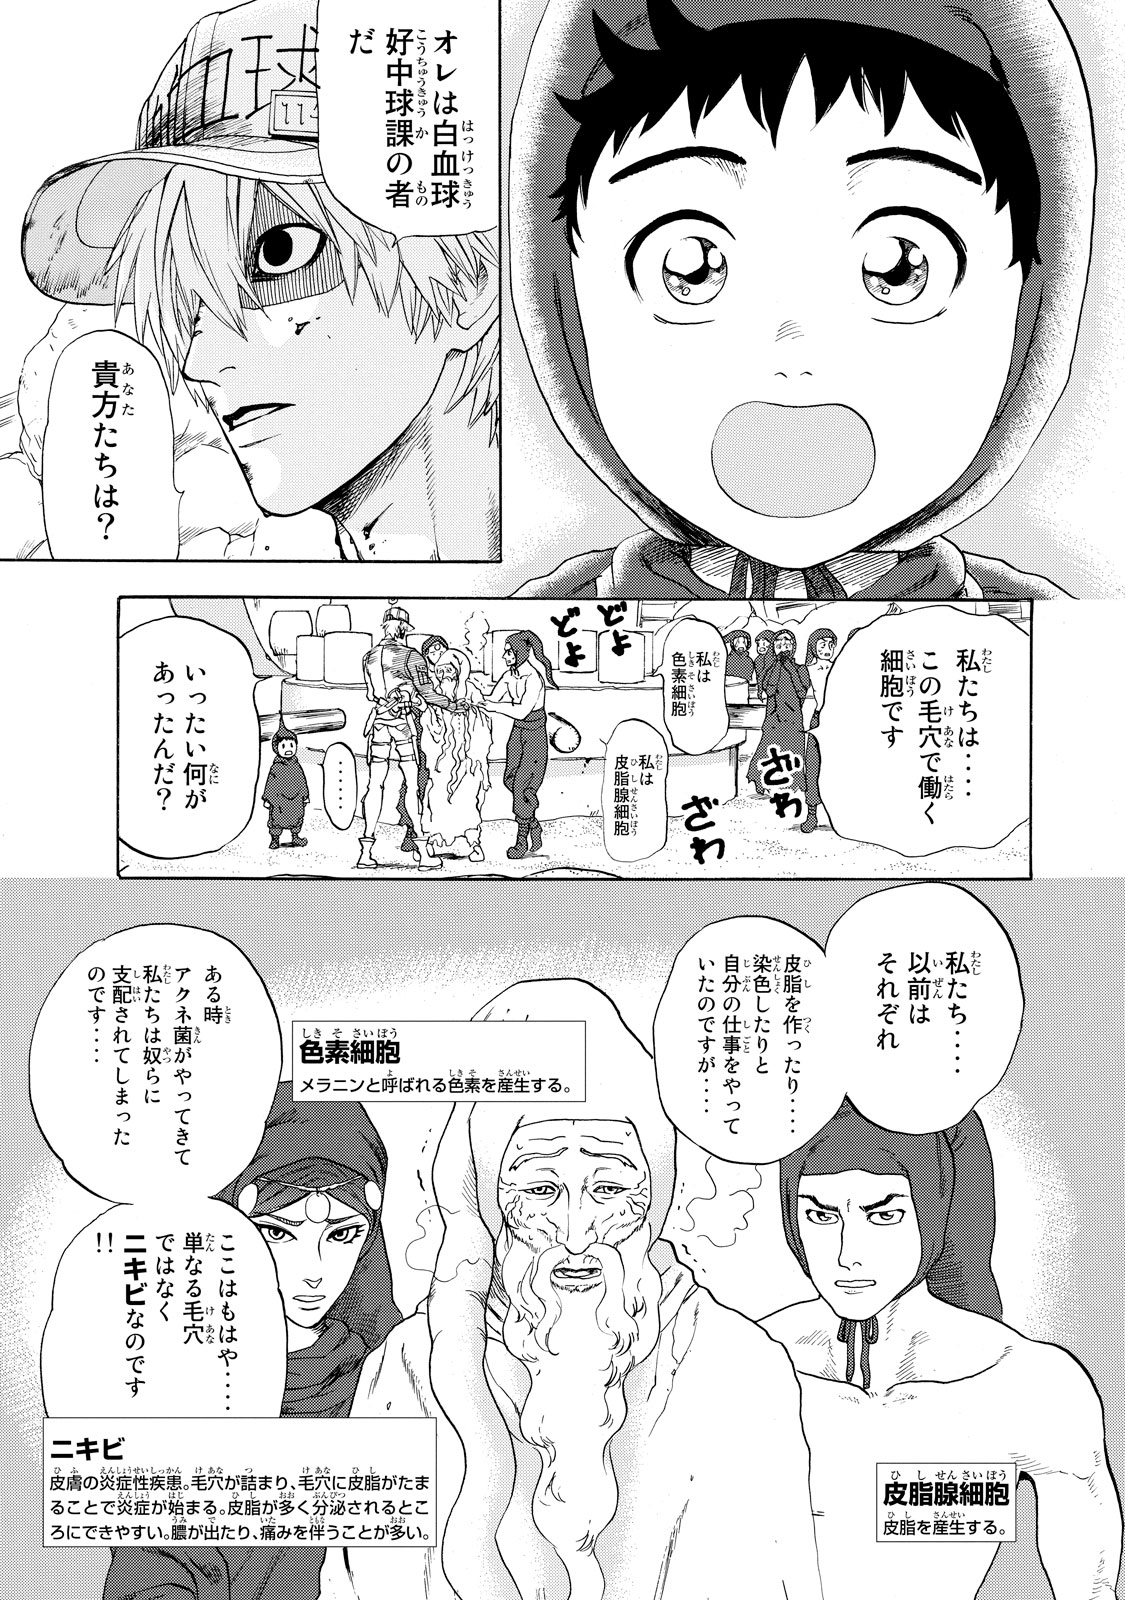 Hataraku Saibou - Chapter 14 - Page 5